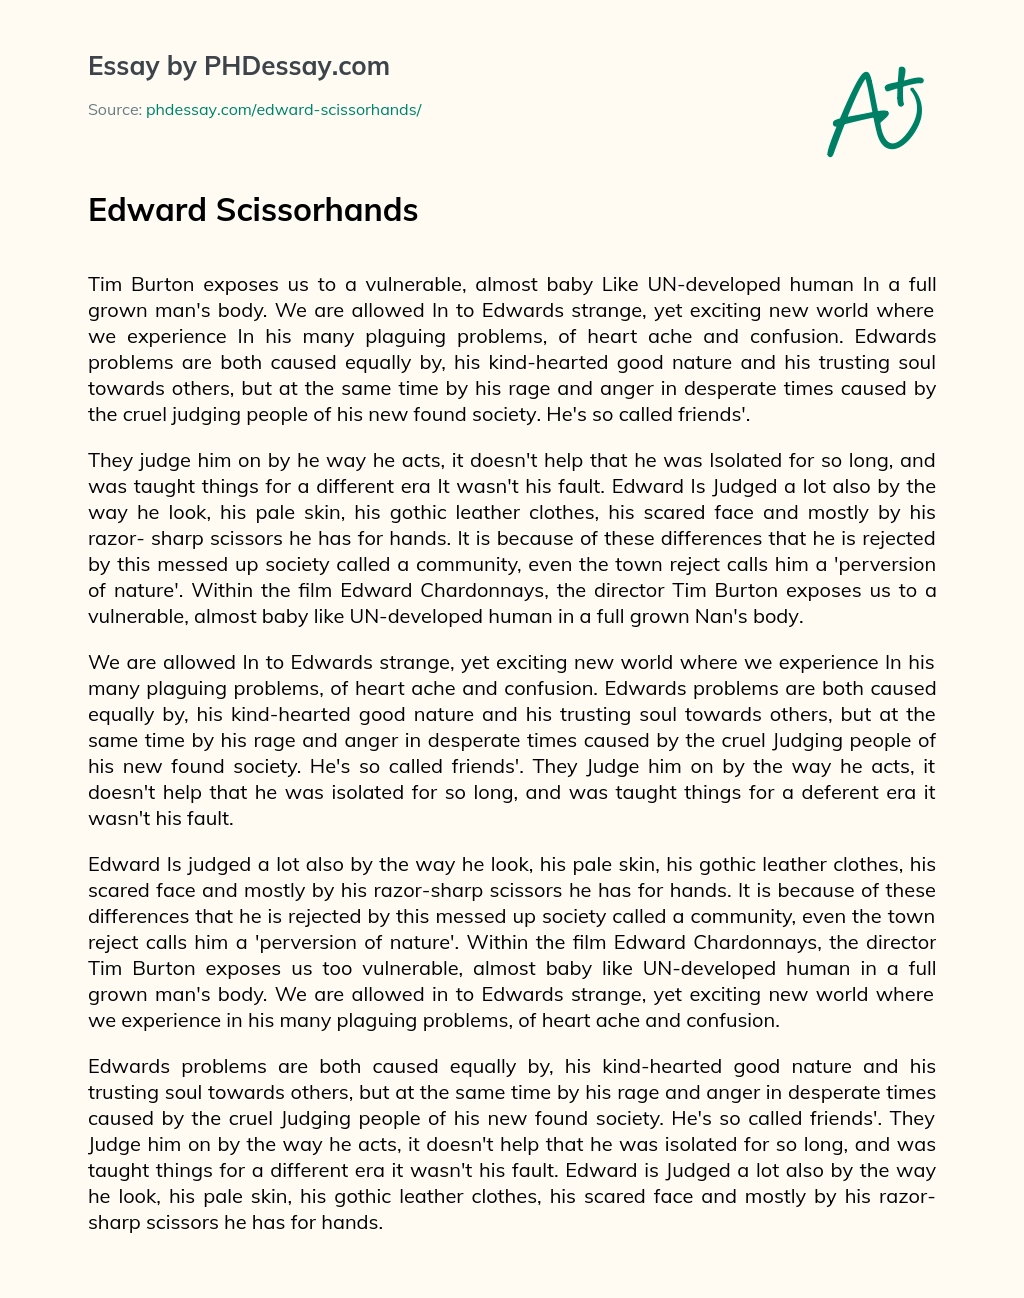 Edward Scissorhands essay